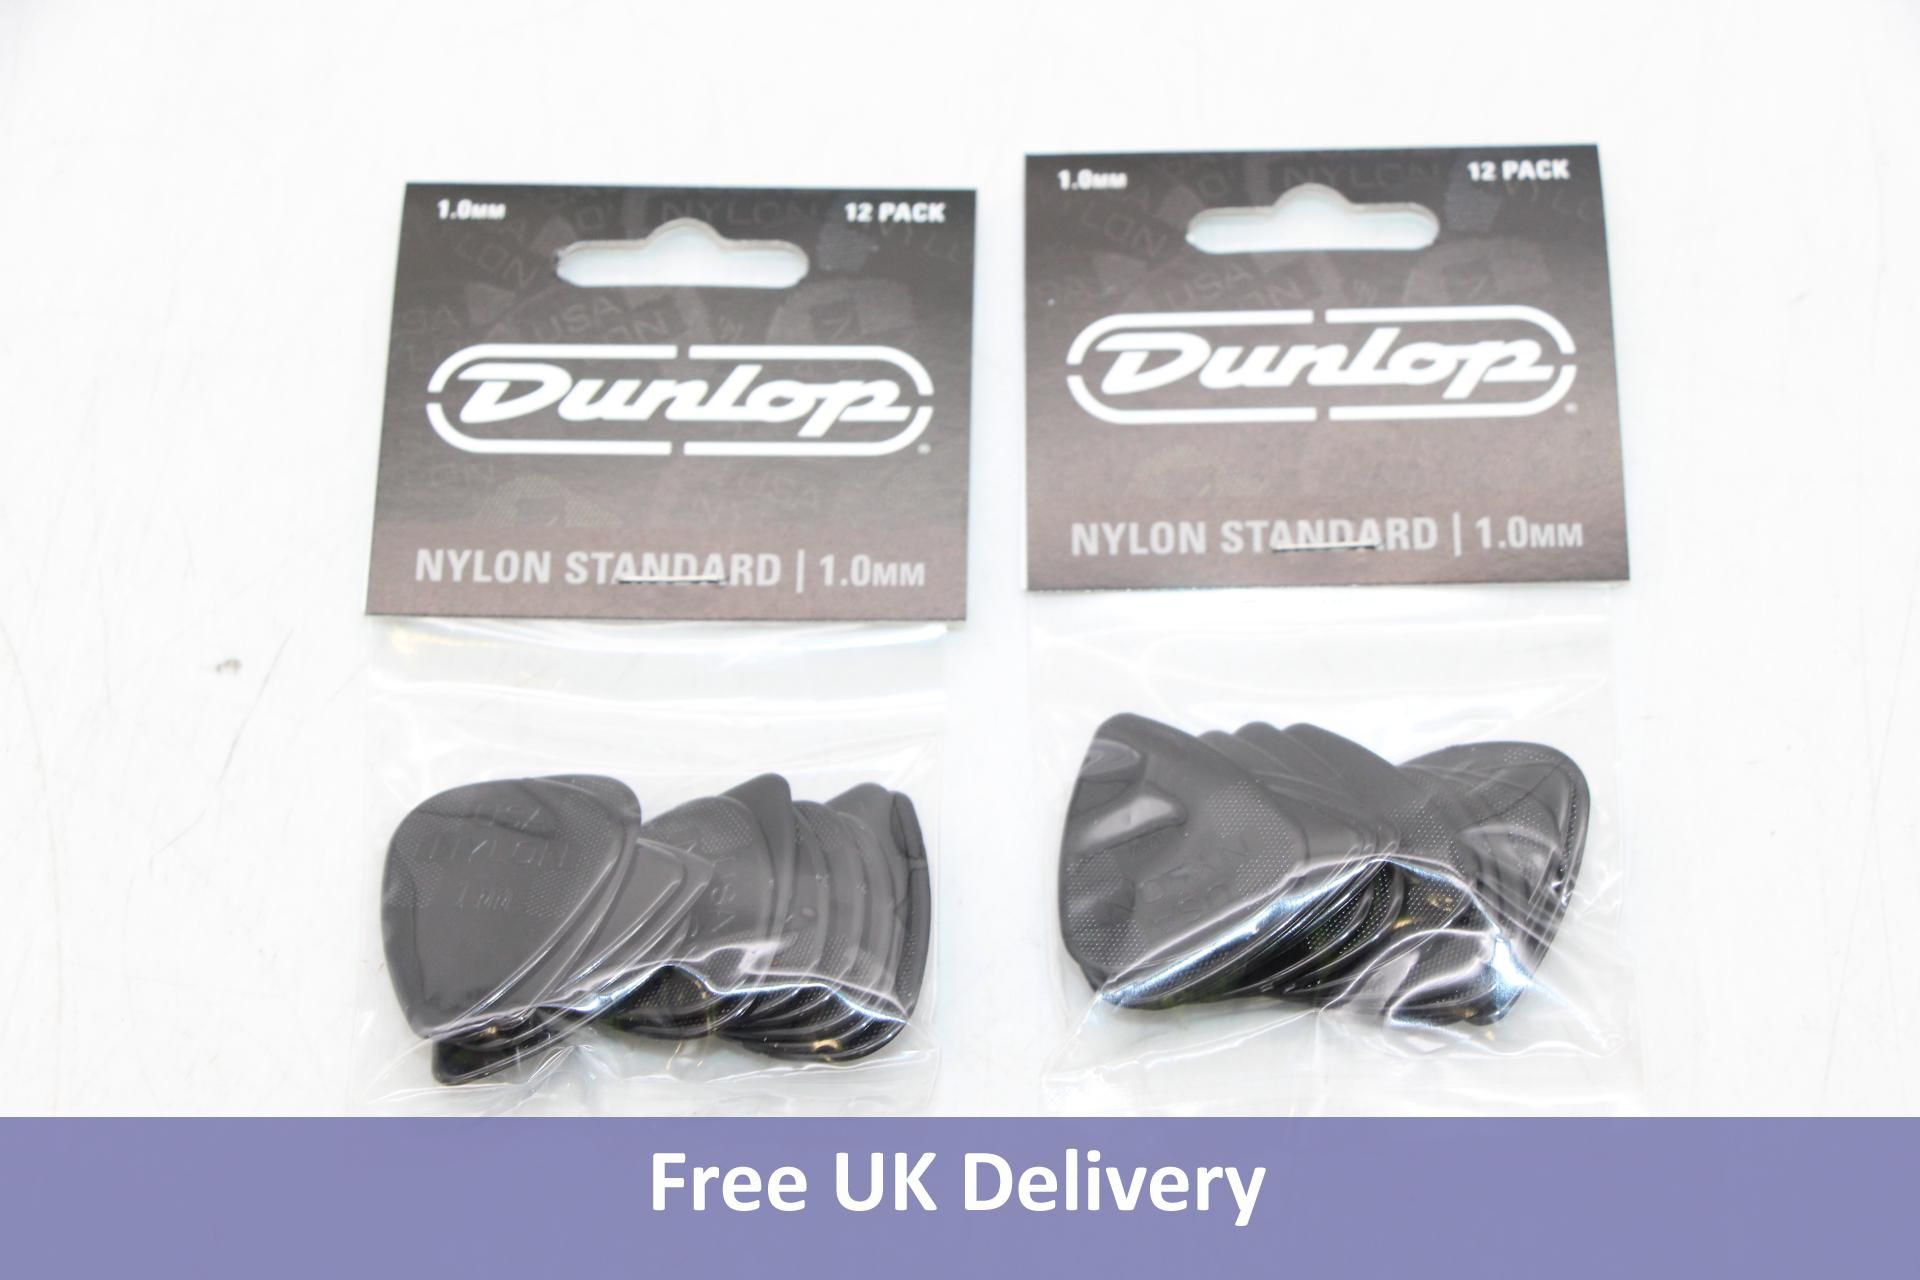 Ten Dunlop Nylon Standard Guitar Picks, 12 Per Pack, Black, Size 1.0mm